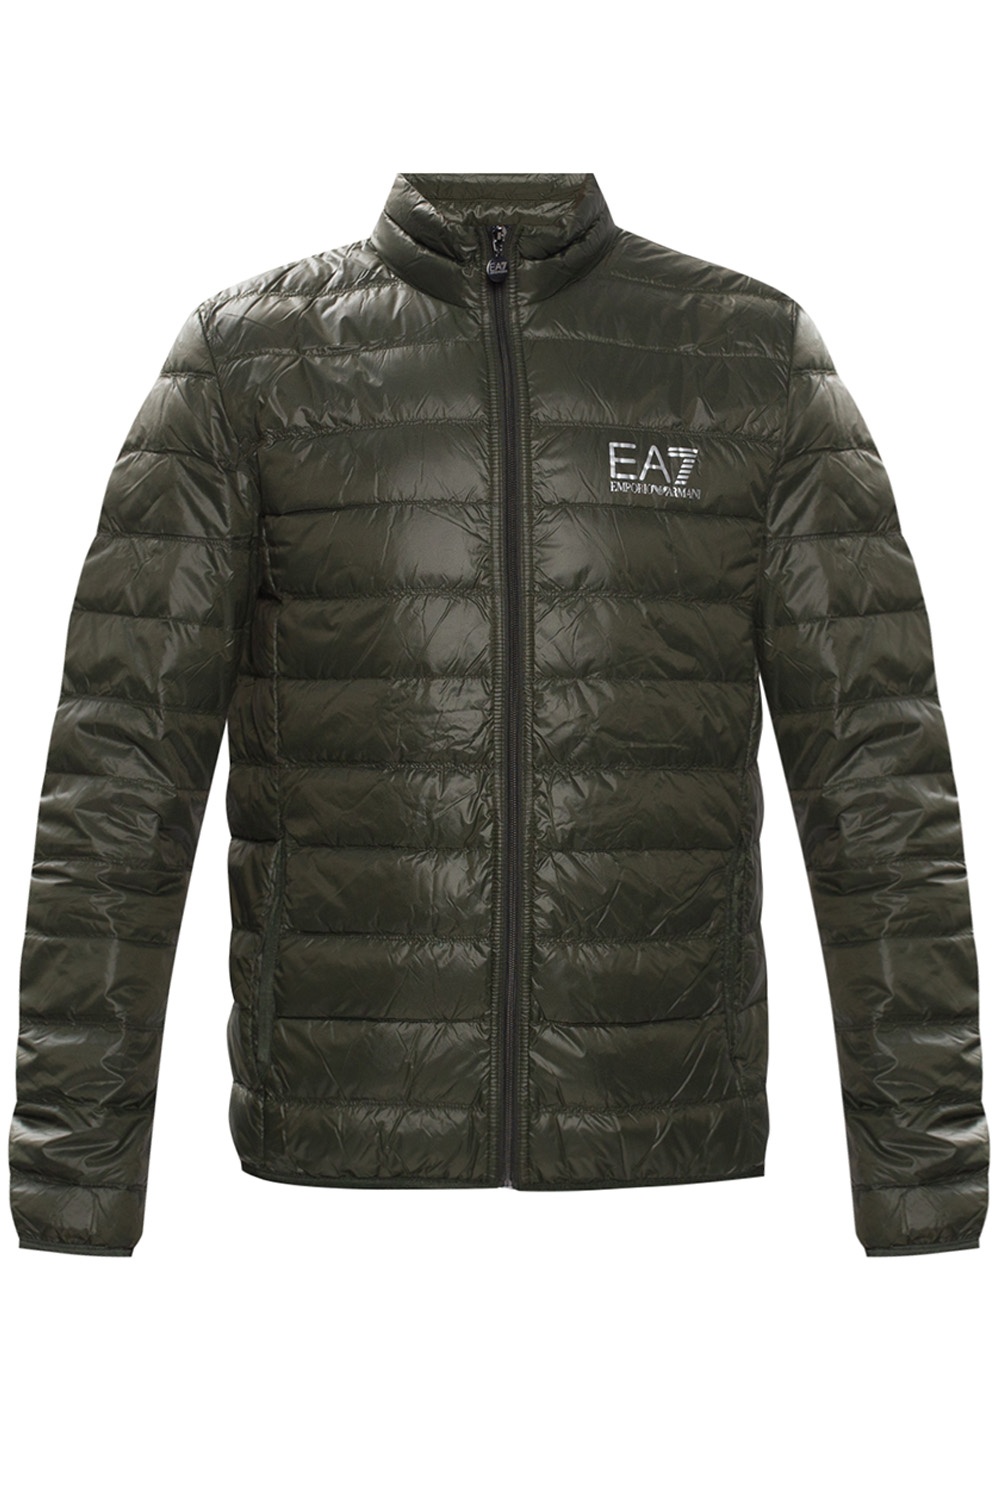 Emporio Armani EA7 Men's padded Jacket